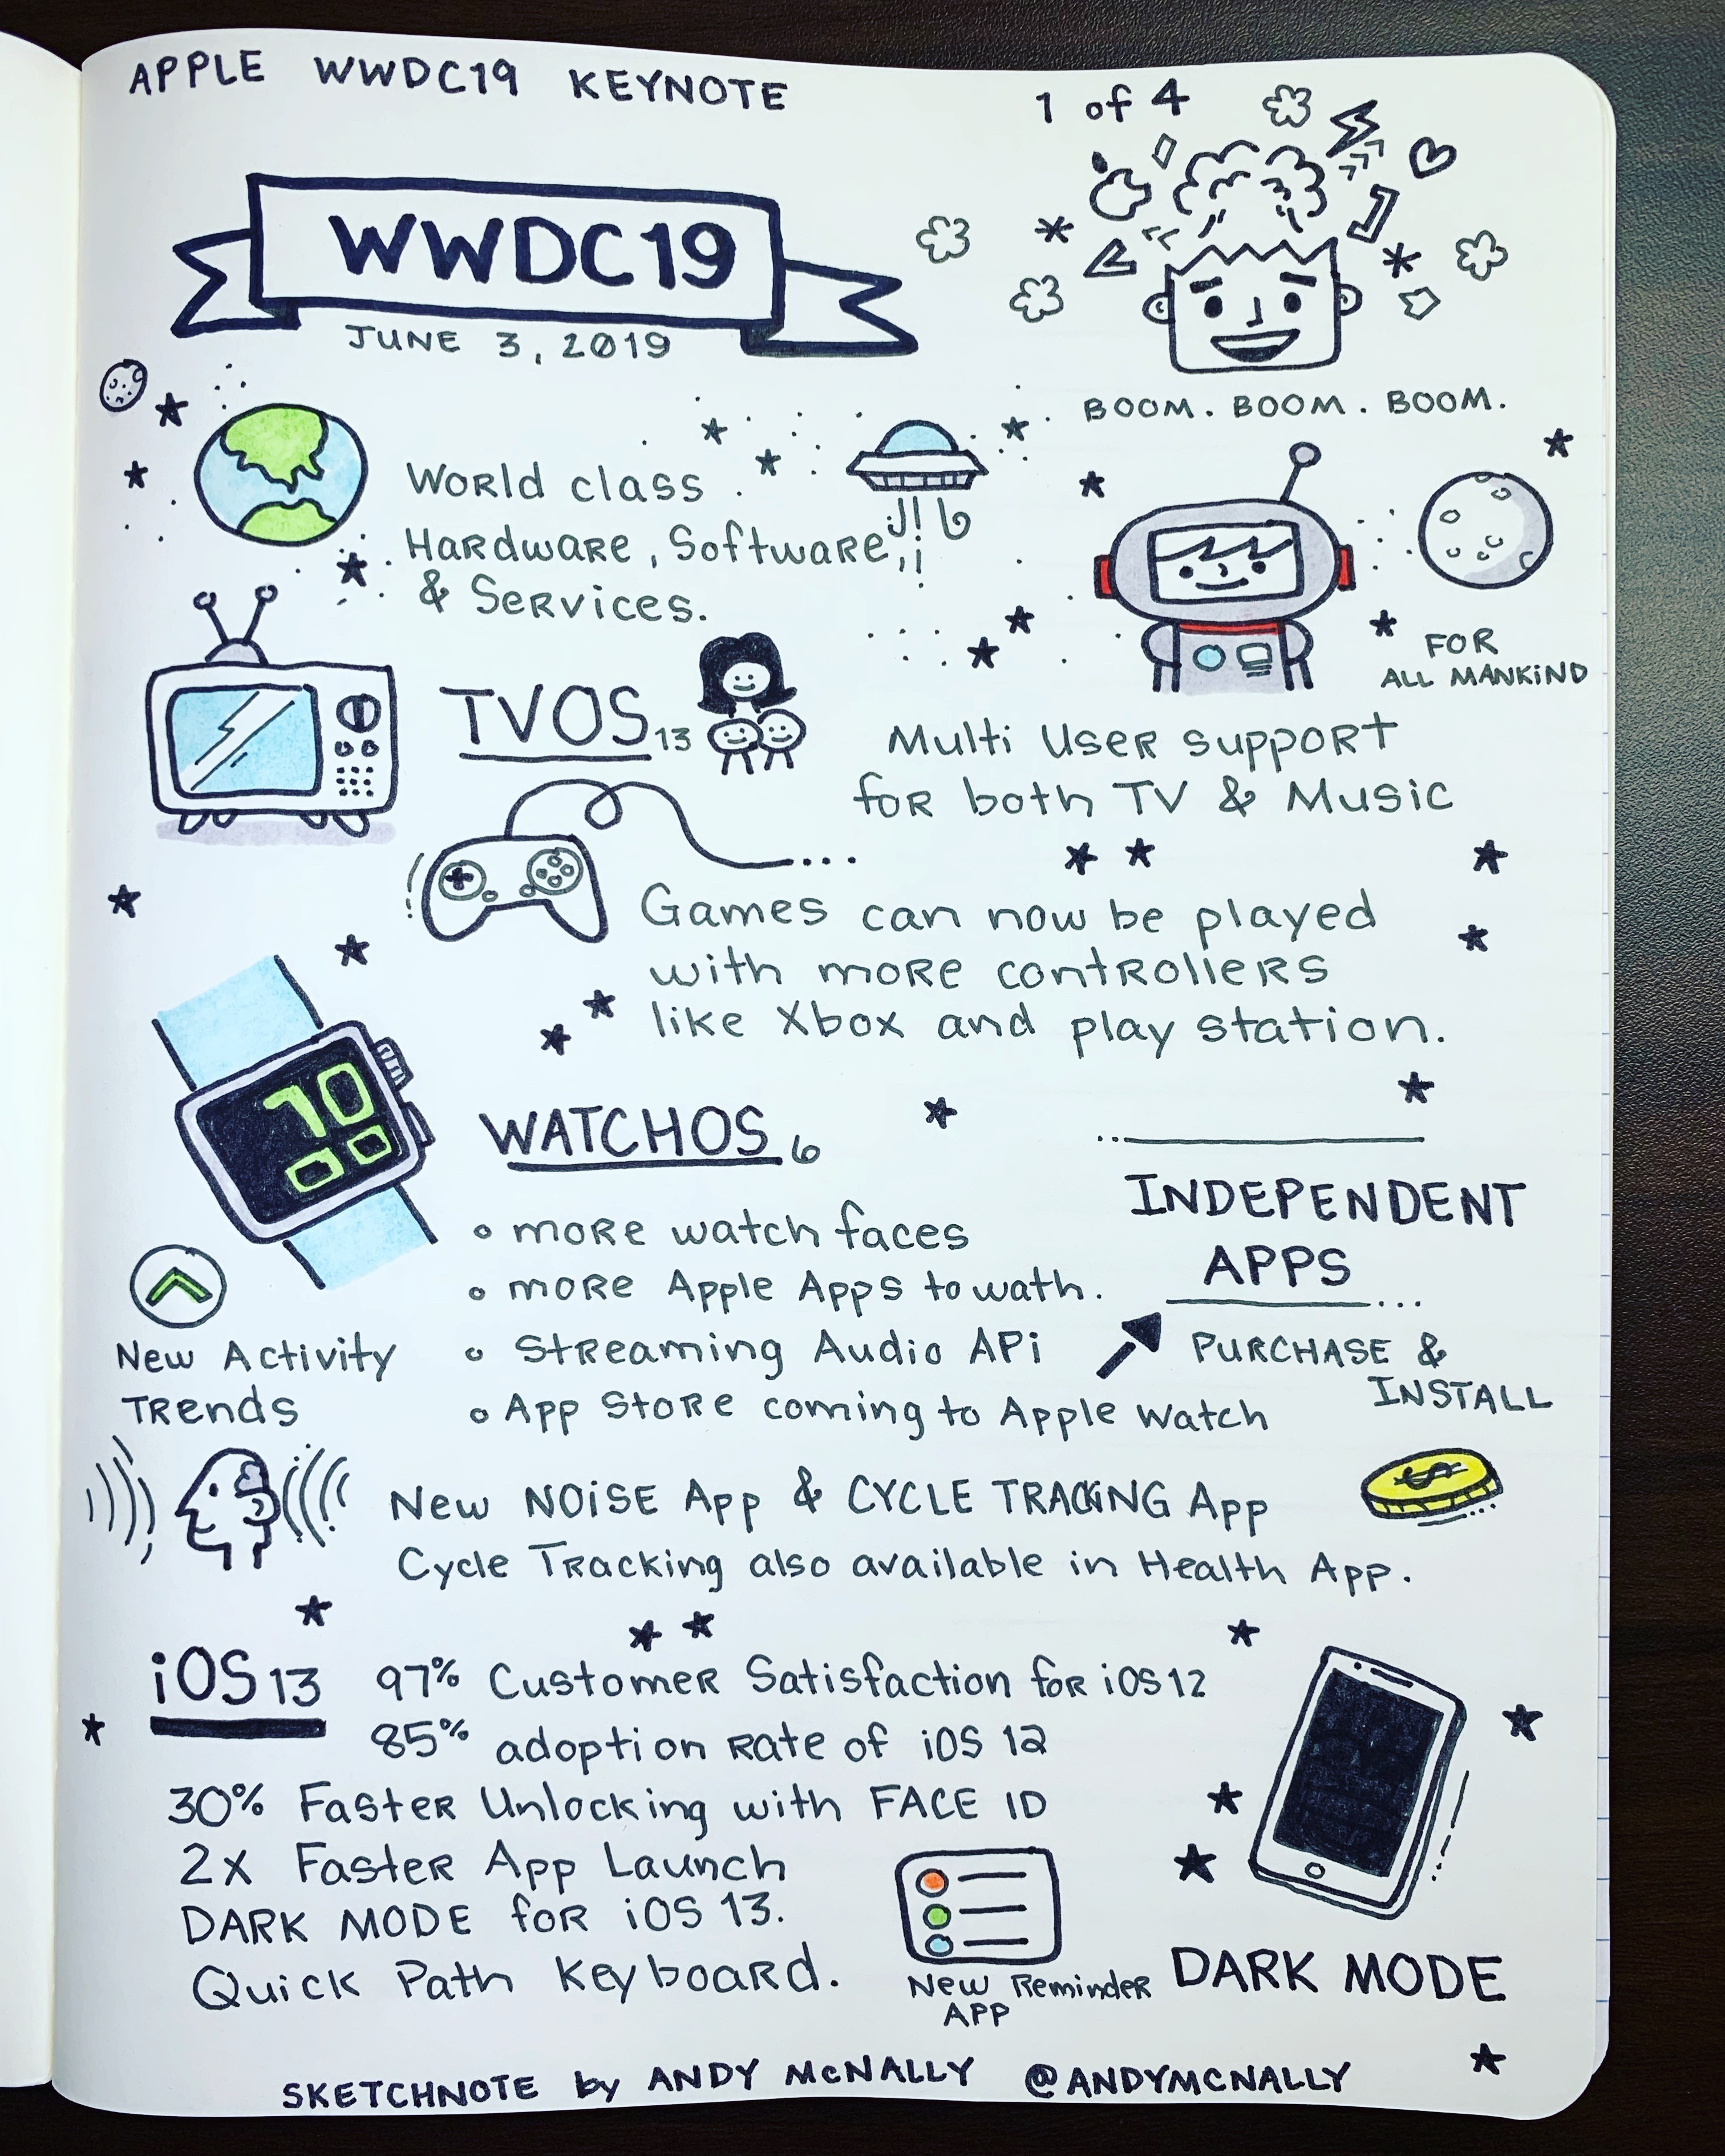 Apple WWDC 2019 Keynote sketchnotes 1 of 4